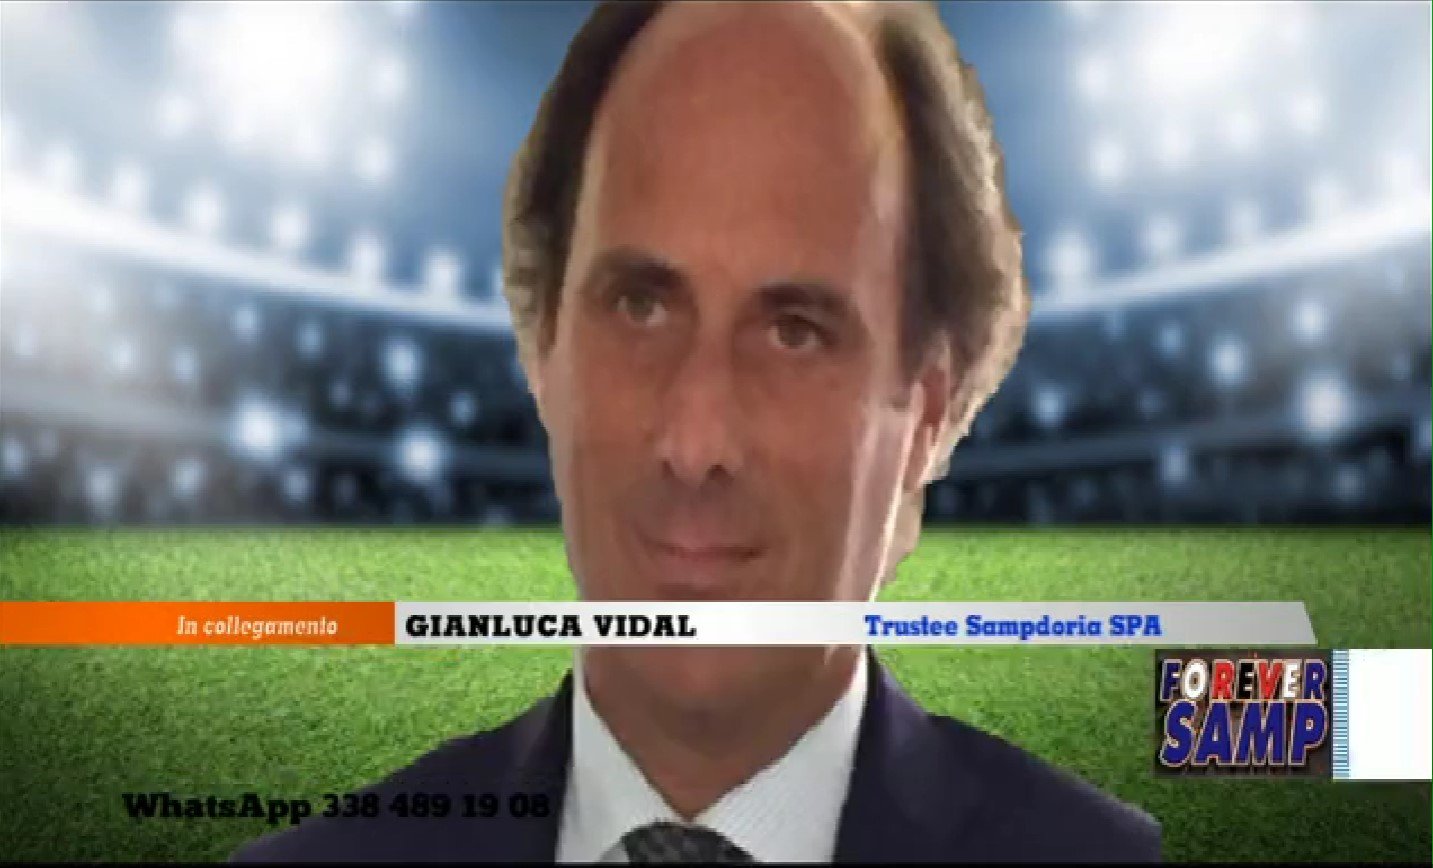 Cessione Sampdoria Vidal Gruppo Arabo